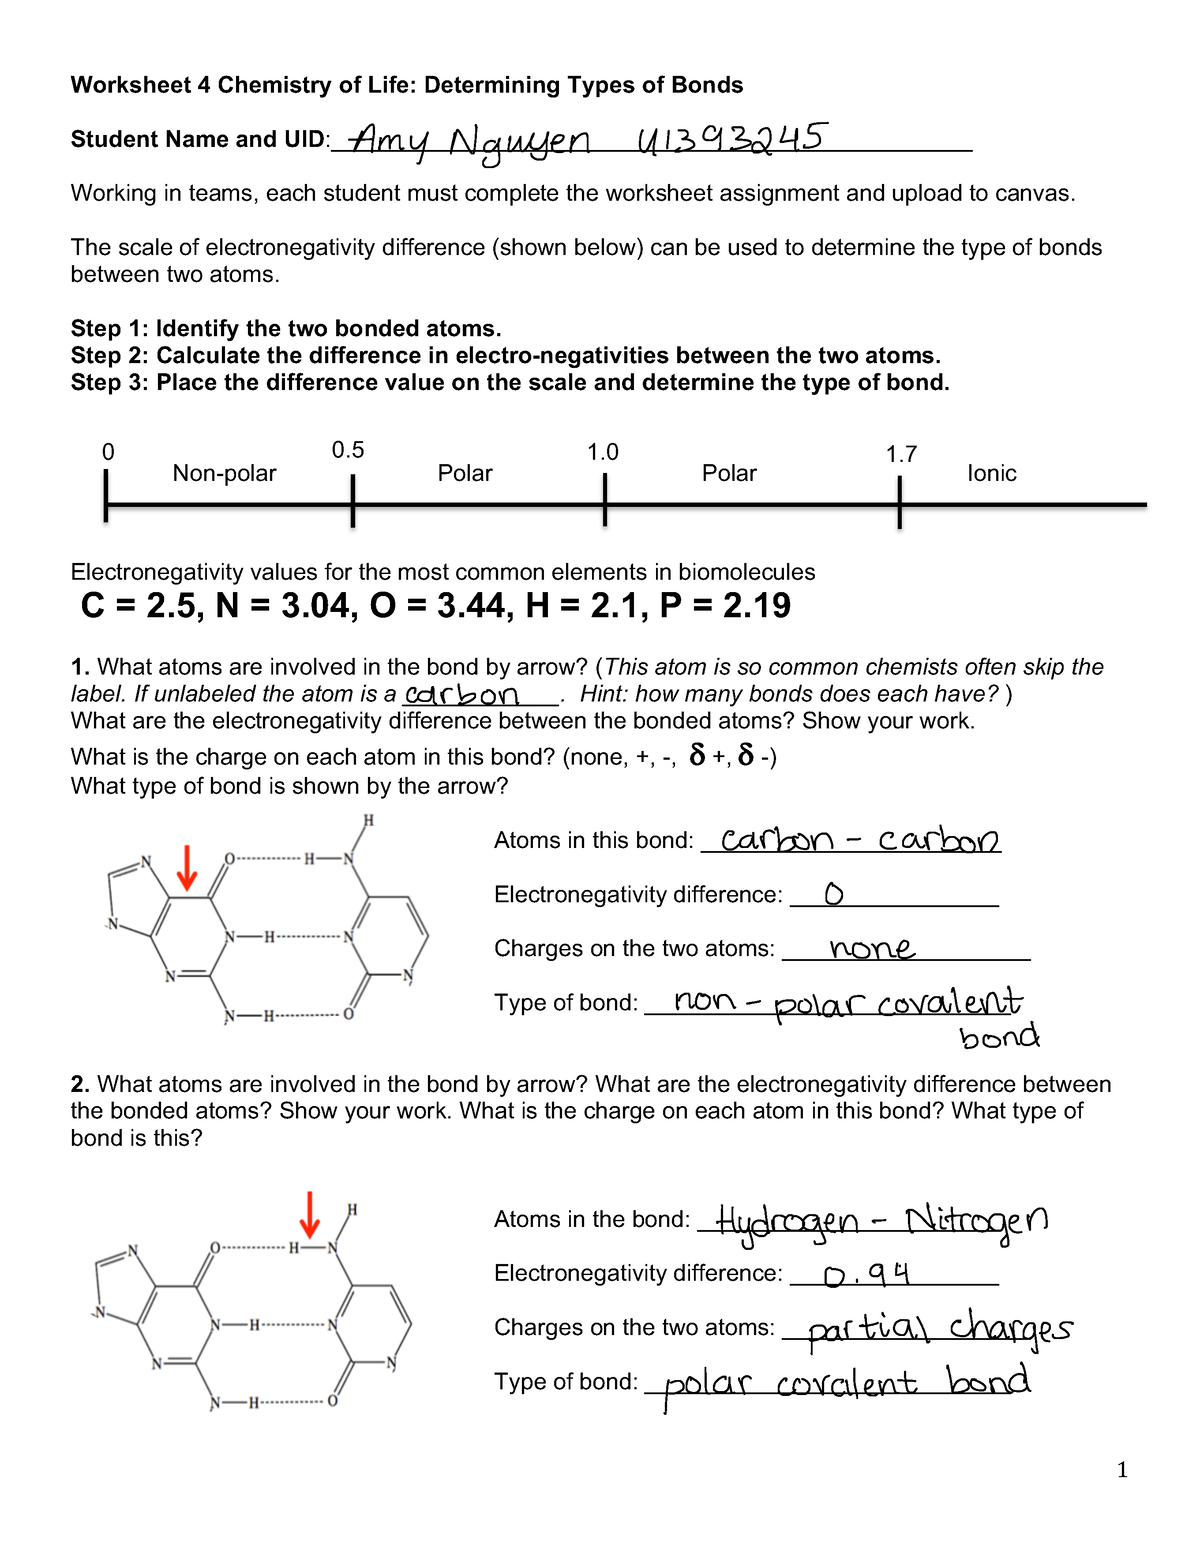 worksheet-4-types-of-bonds-1-worksheet-4-chemistry-of-life